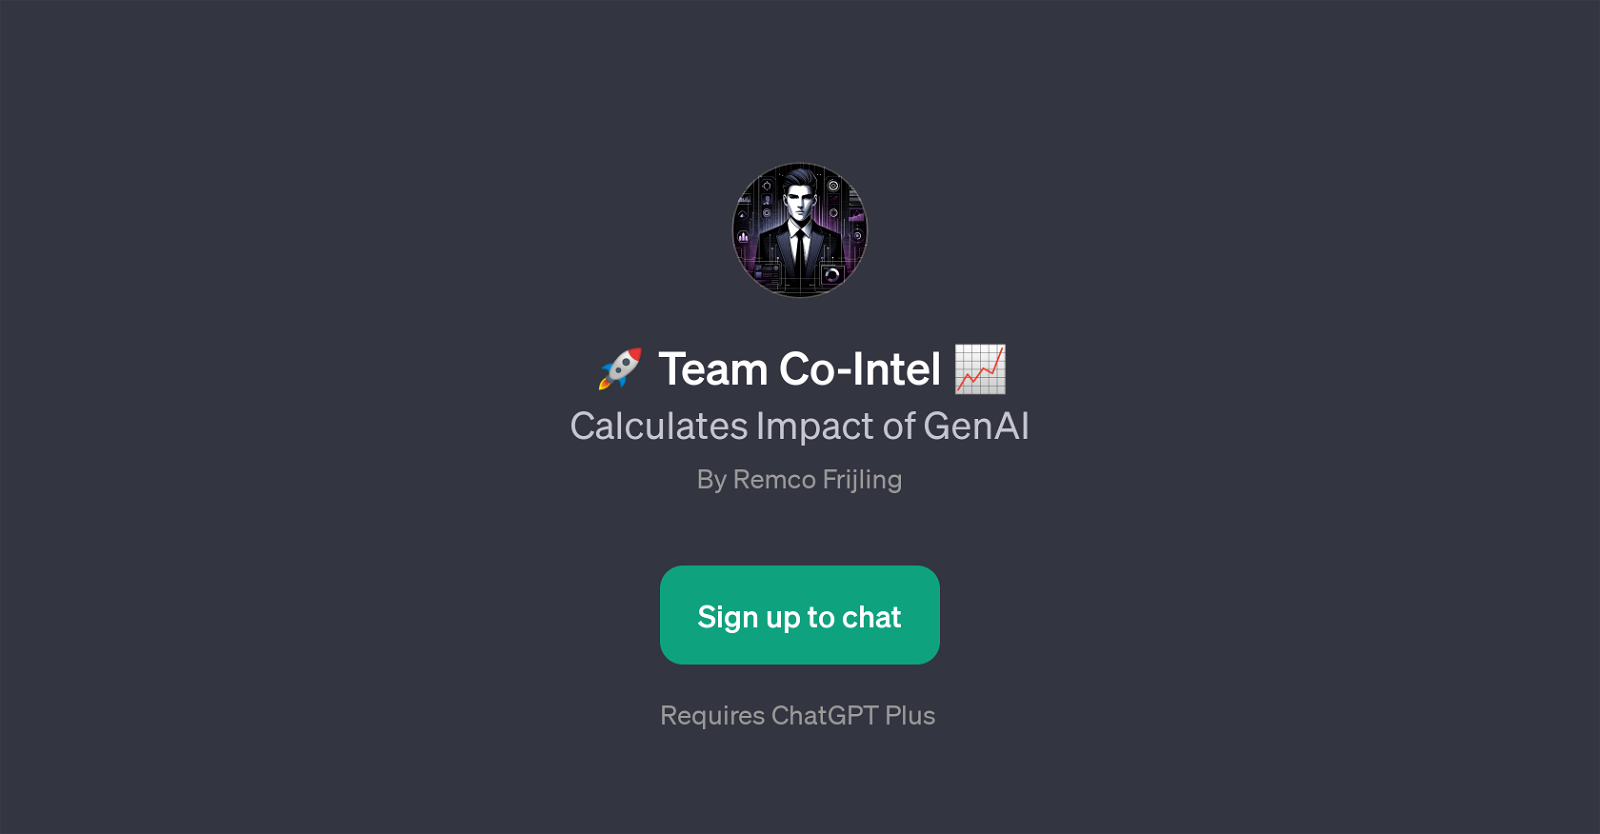 Team Co-Intel website